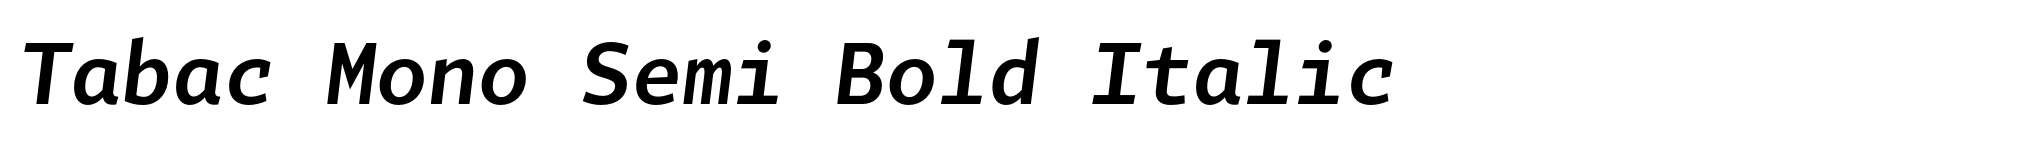 Tabac Mono Semi Bold Italic image